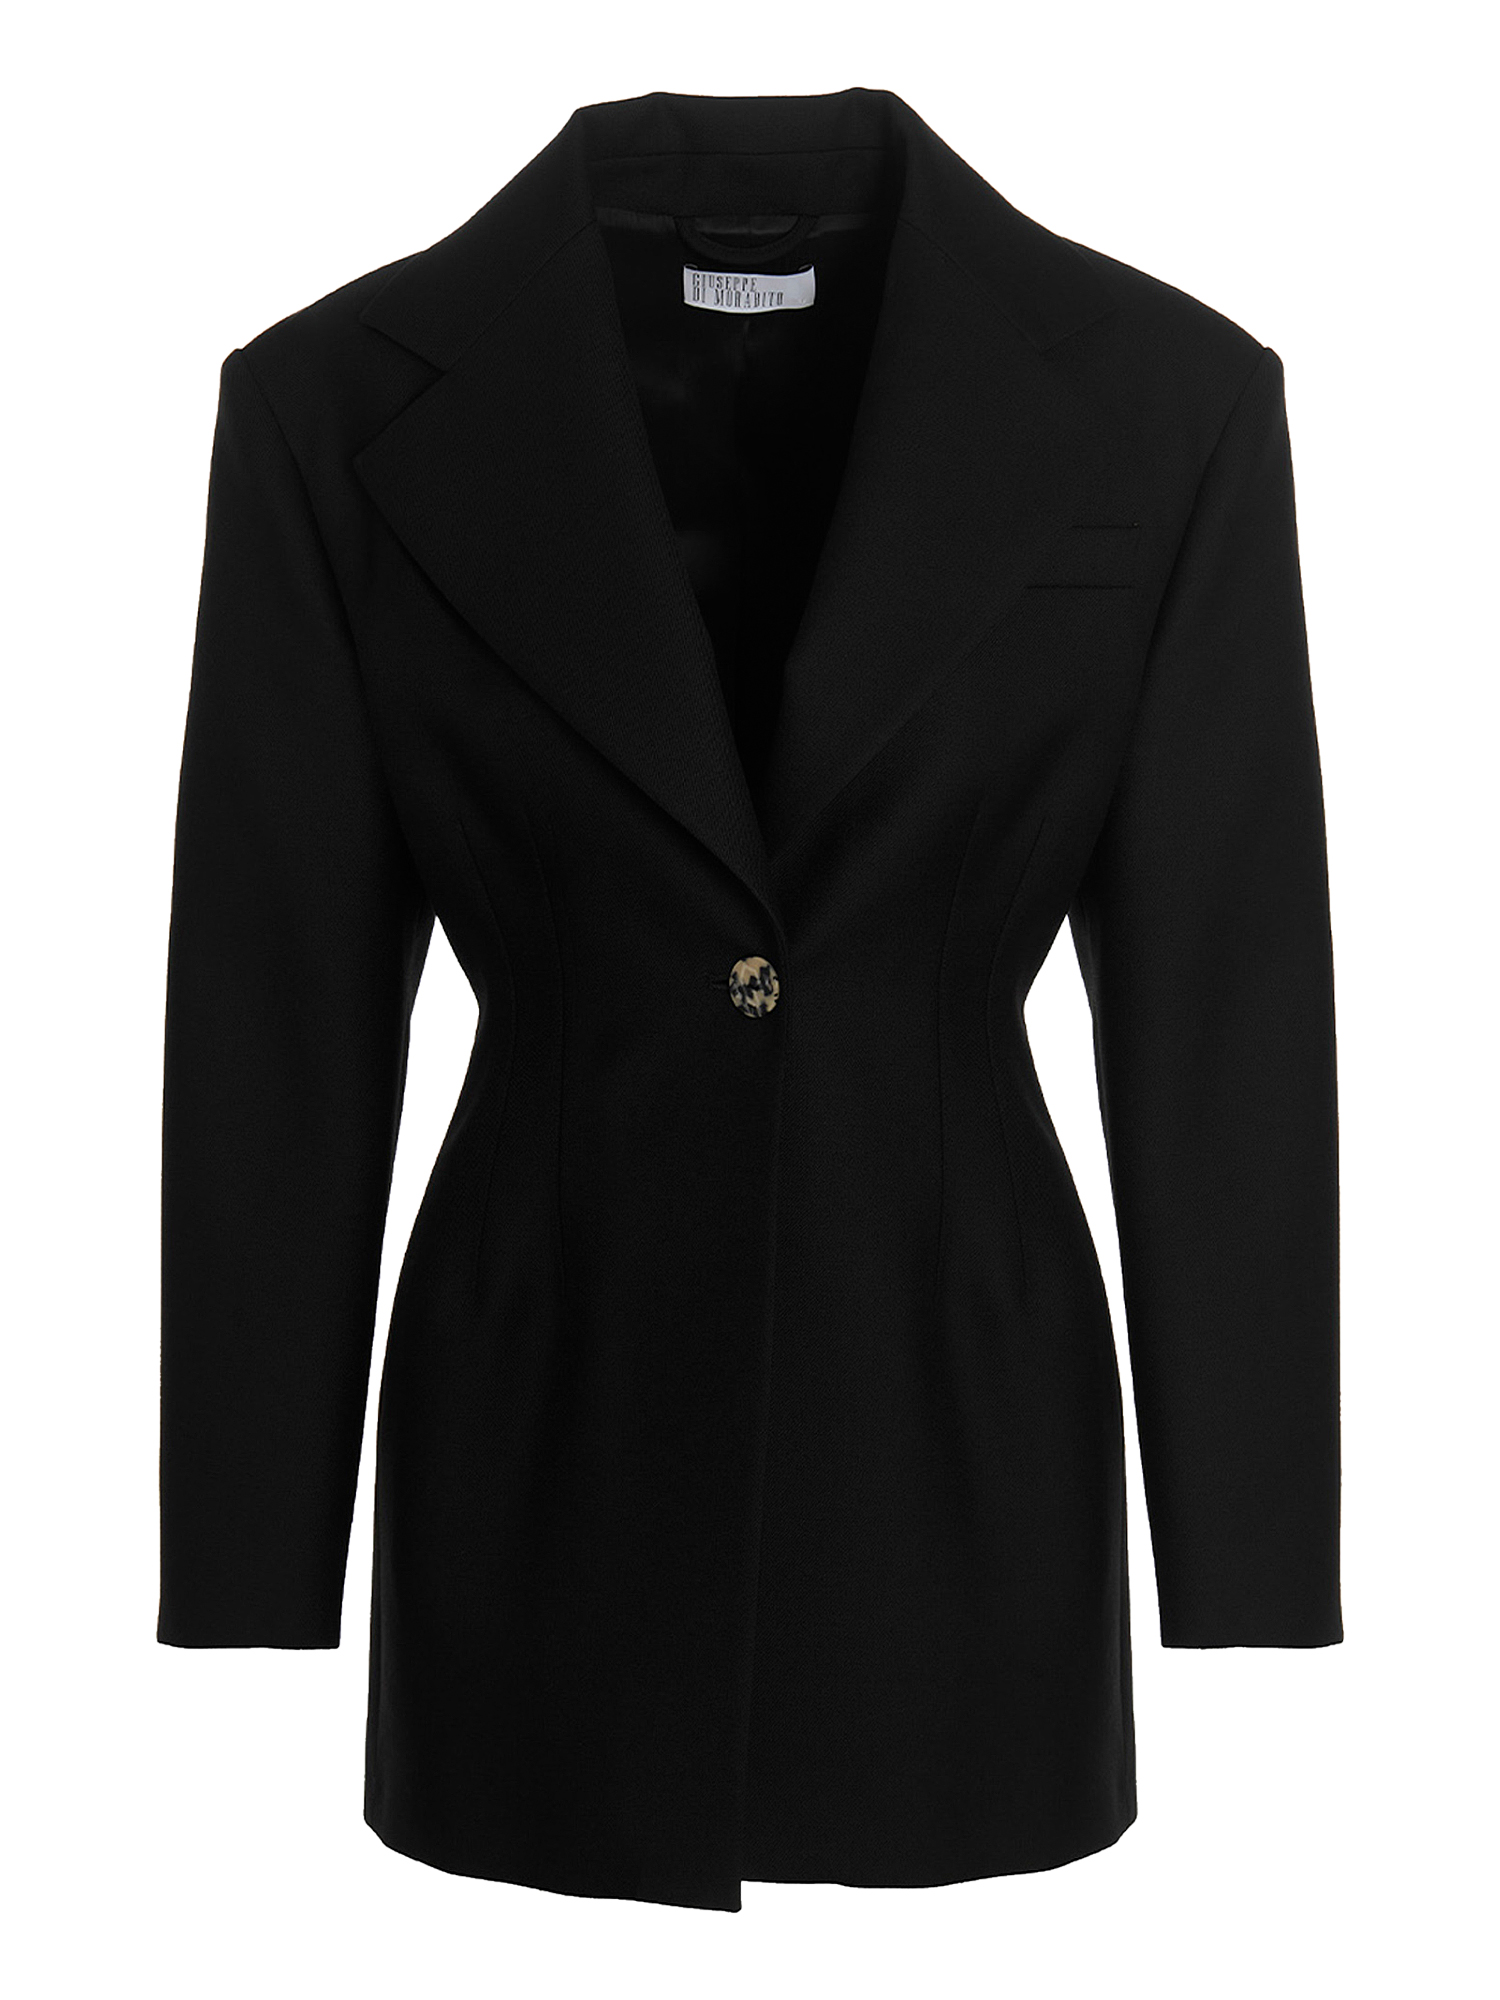 Vestes Pour Femme - Giuseppe Di Morabito - En Wool Black - Taille:  -